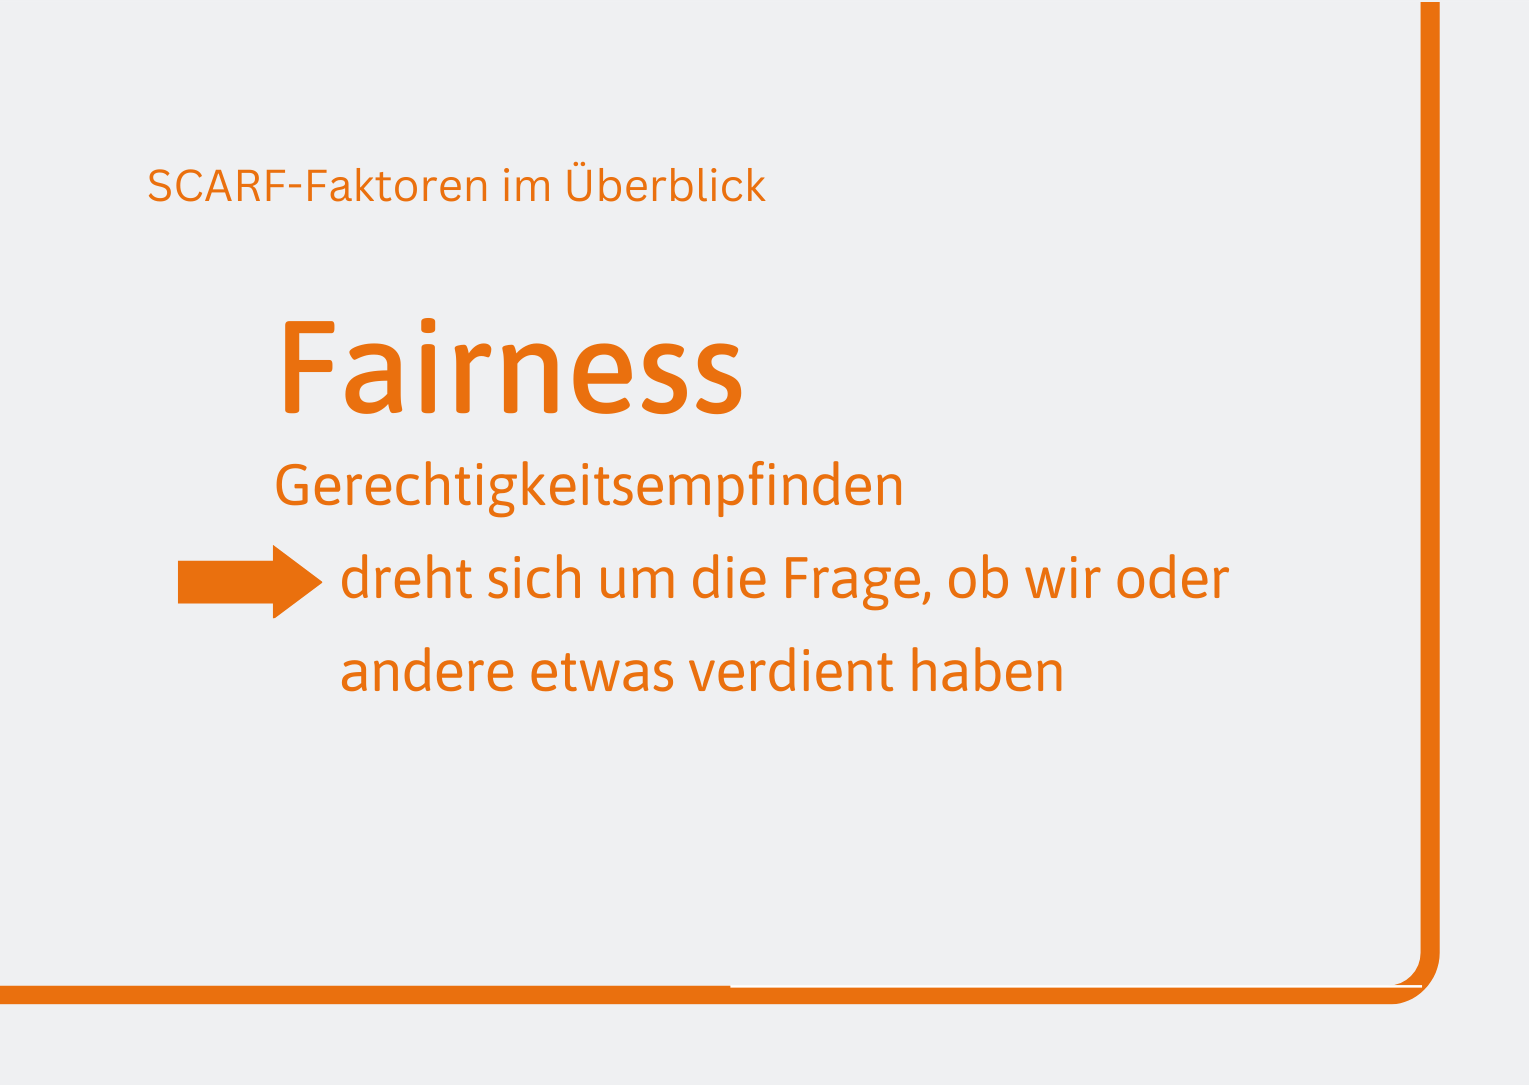 SCARF-Faktor Fairness beschreibt das Gefühl, dass es fair zugeht